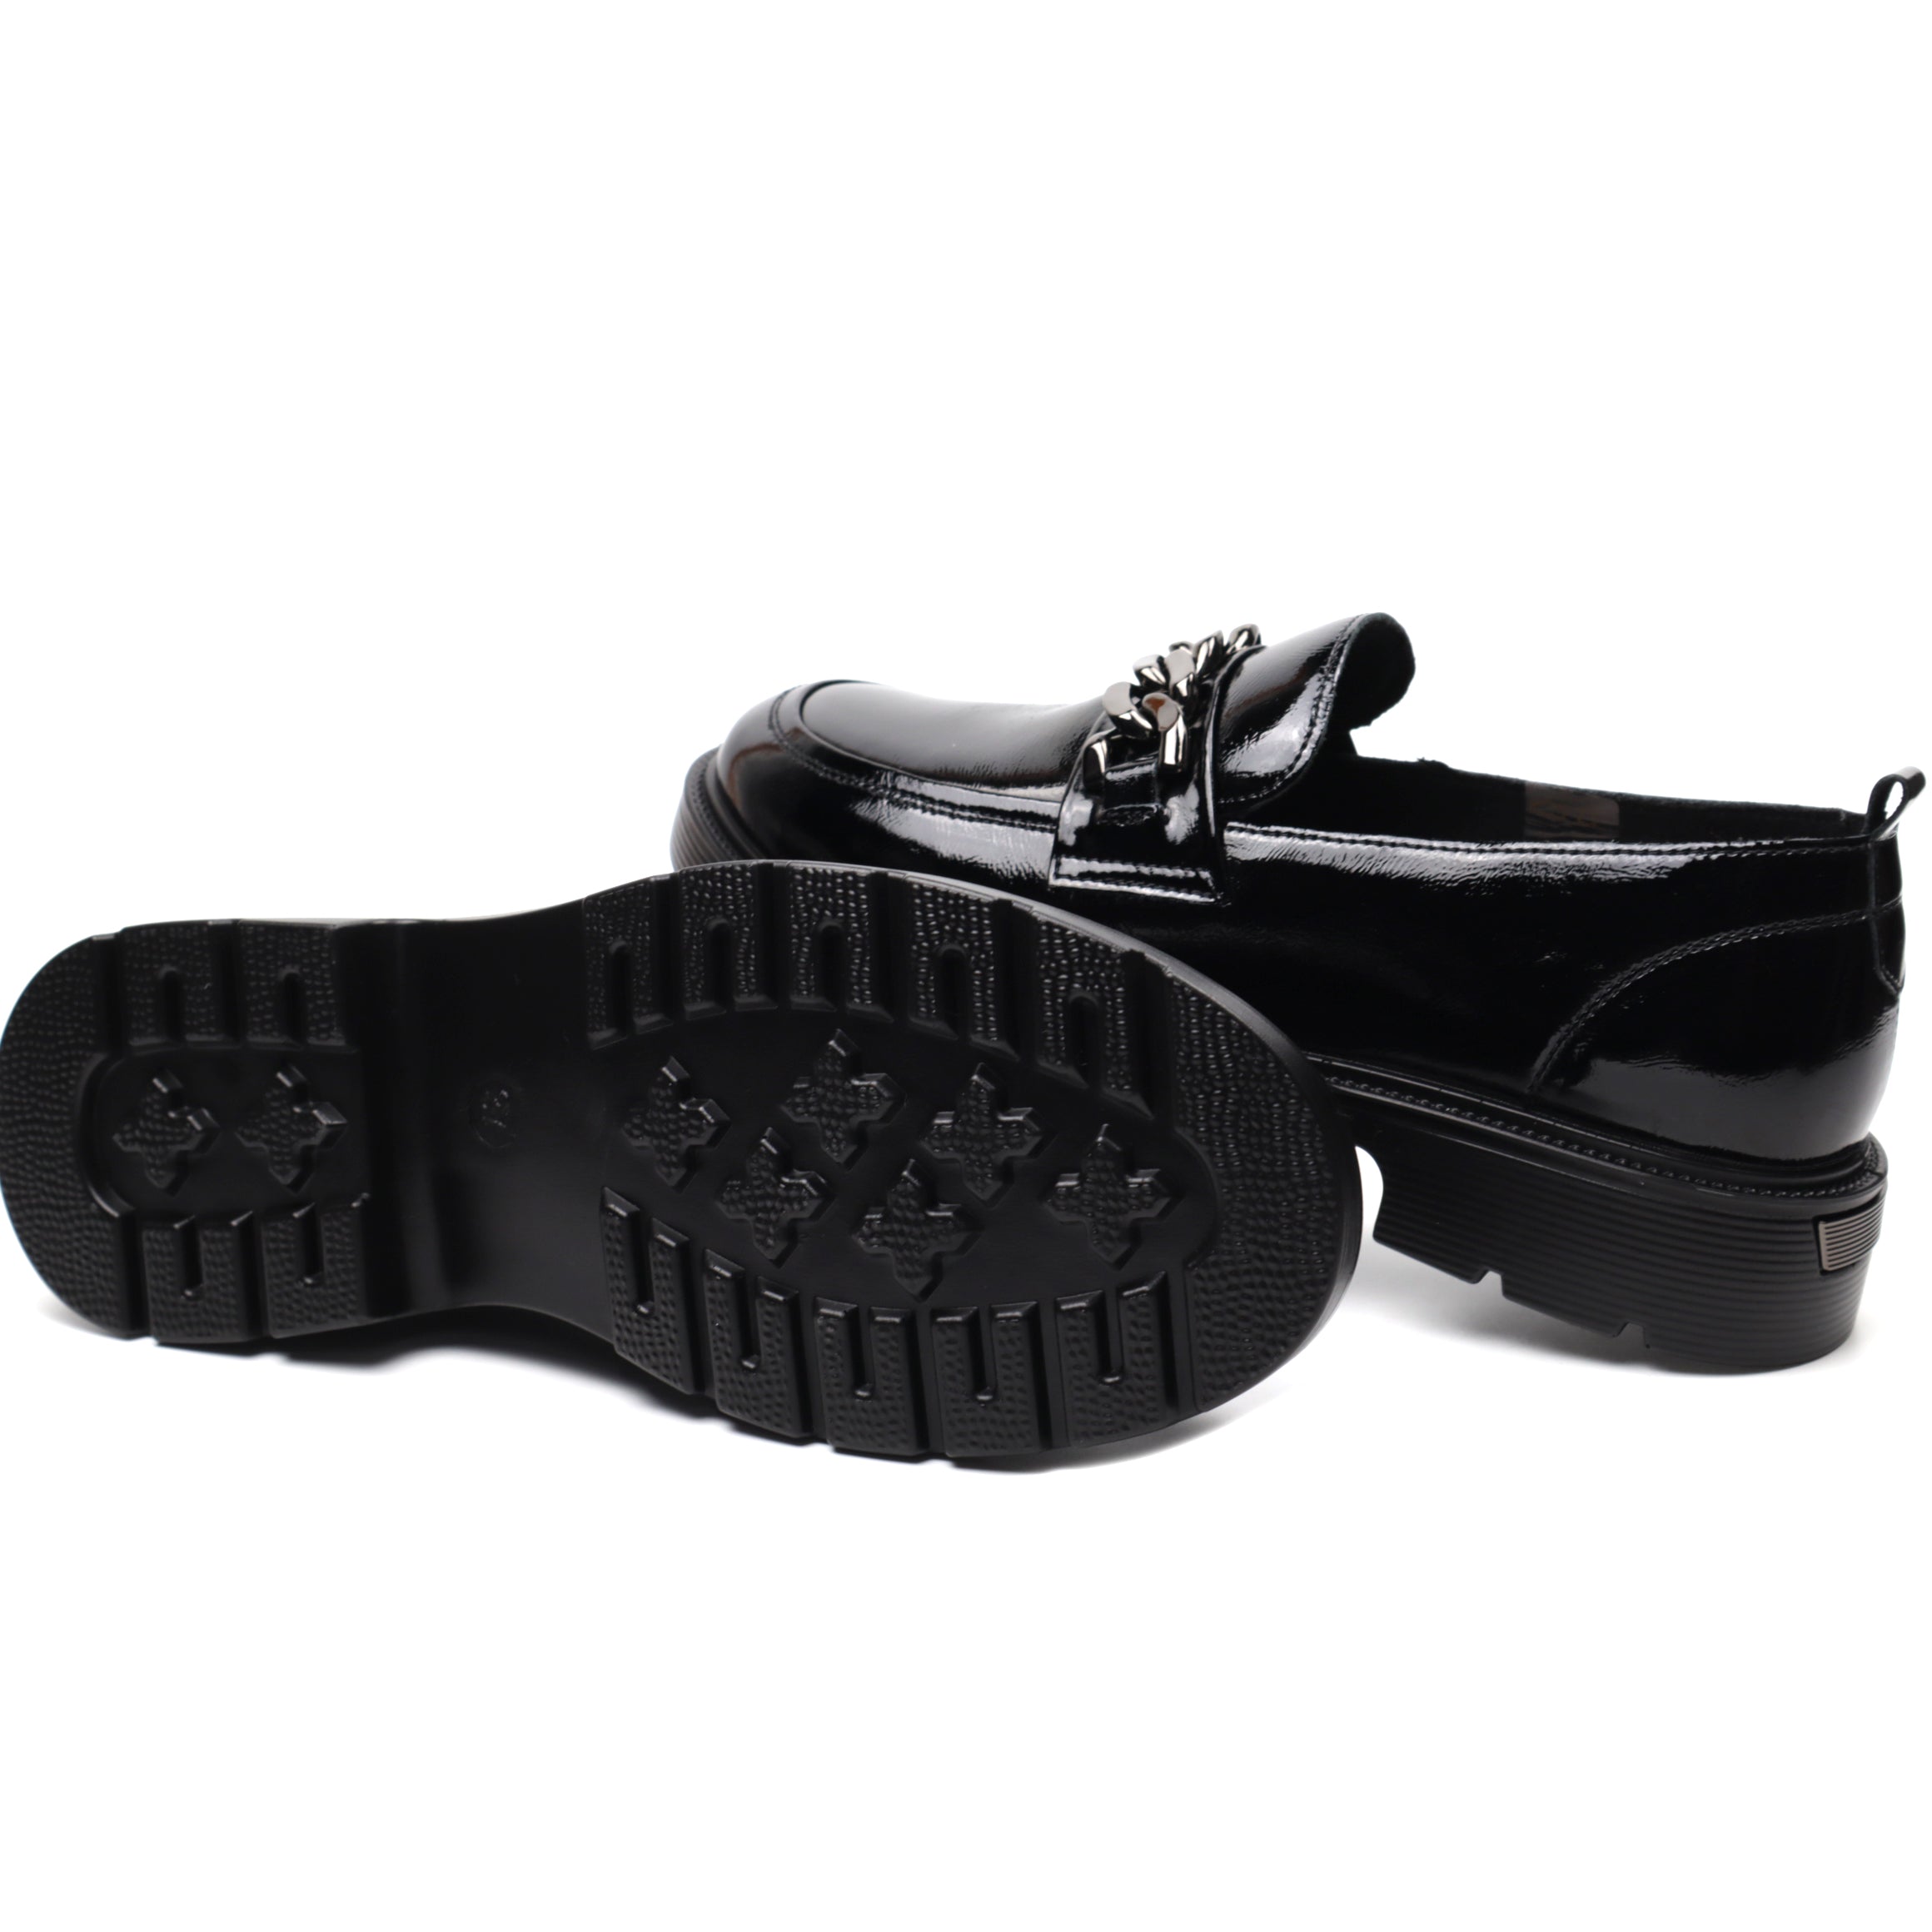 Pass Collection Pantofi dama X4X400008A 01 L negru lac ID3082-NGL